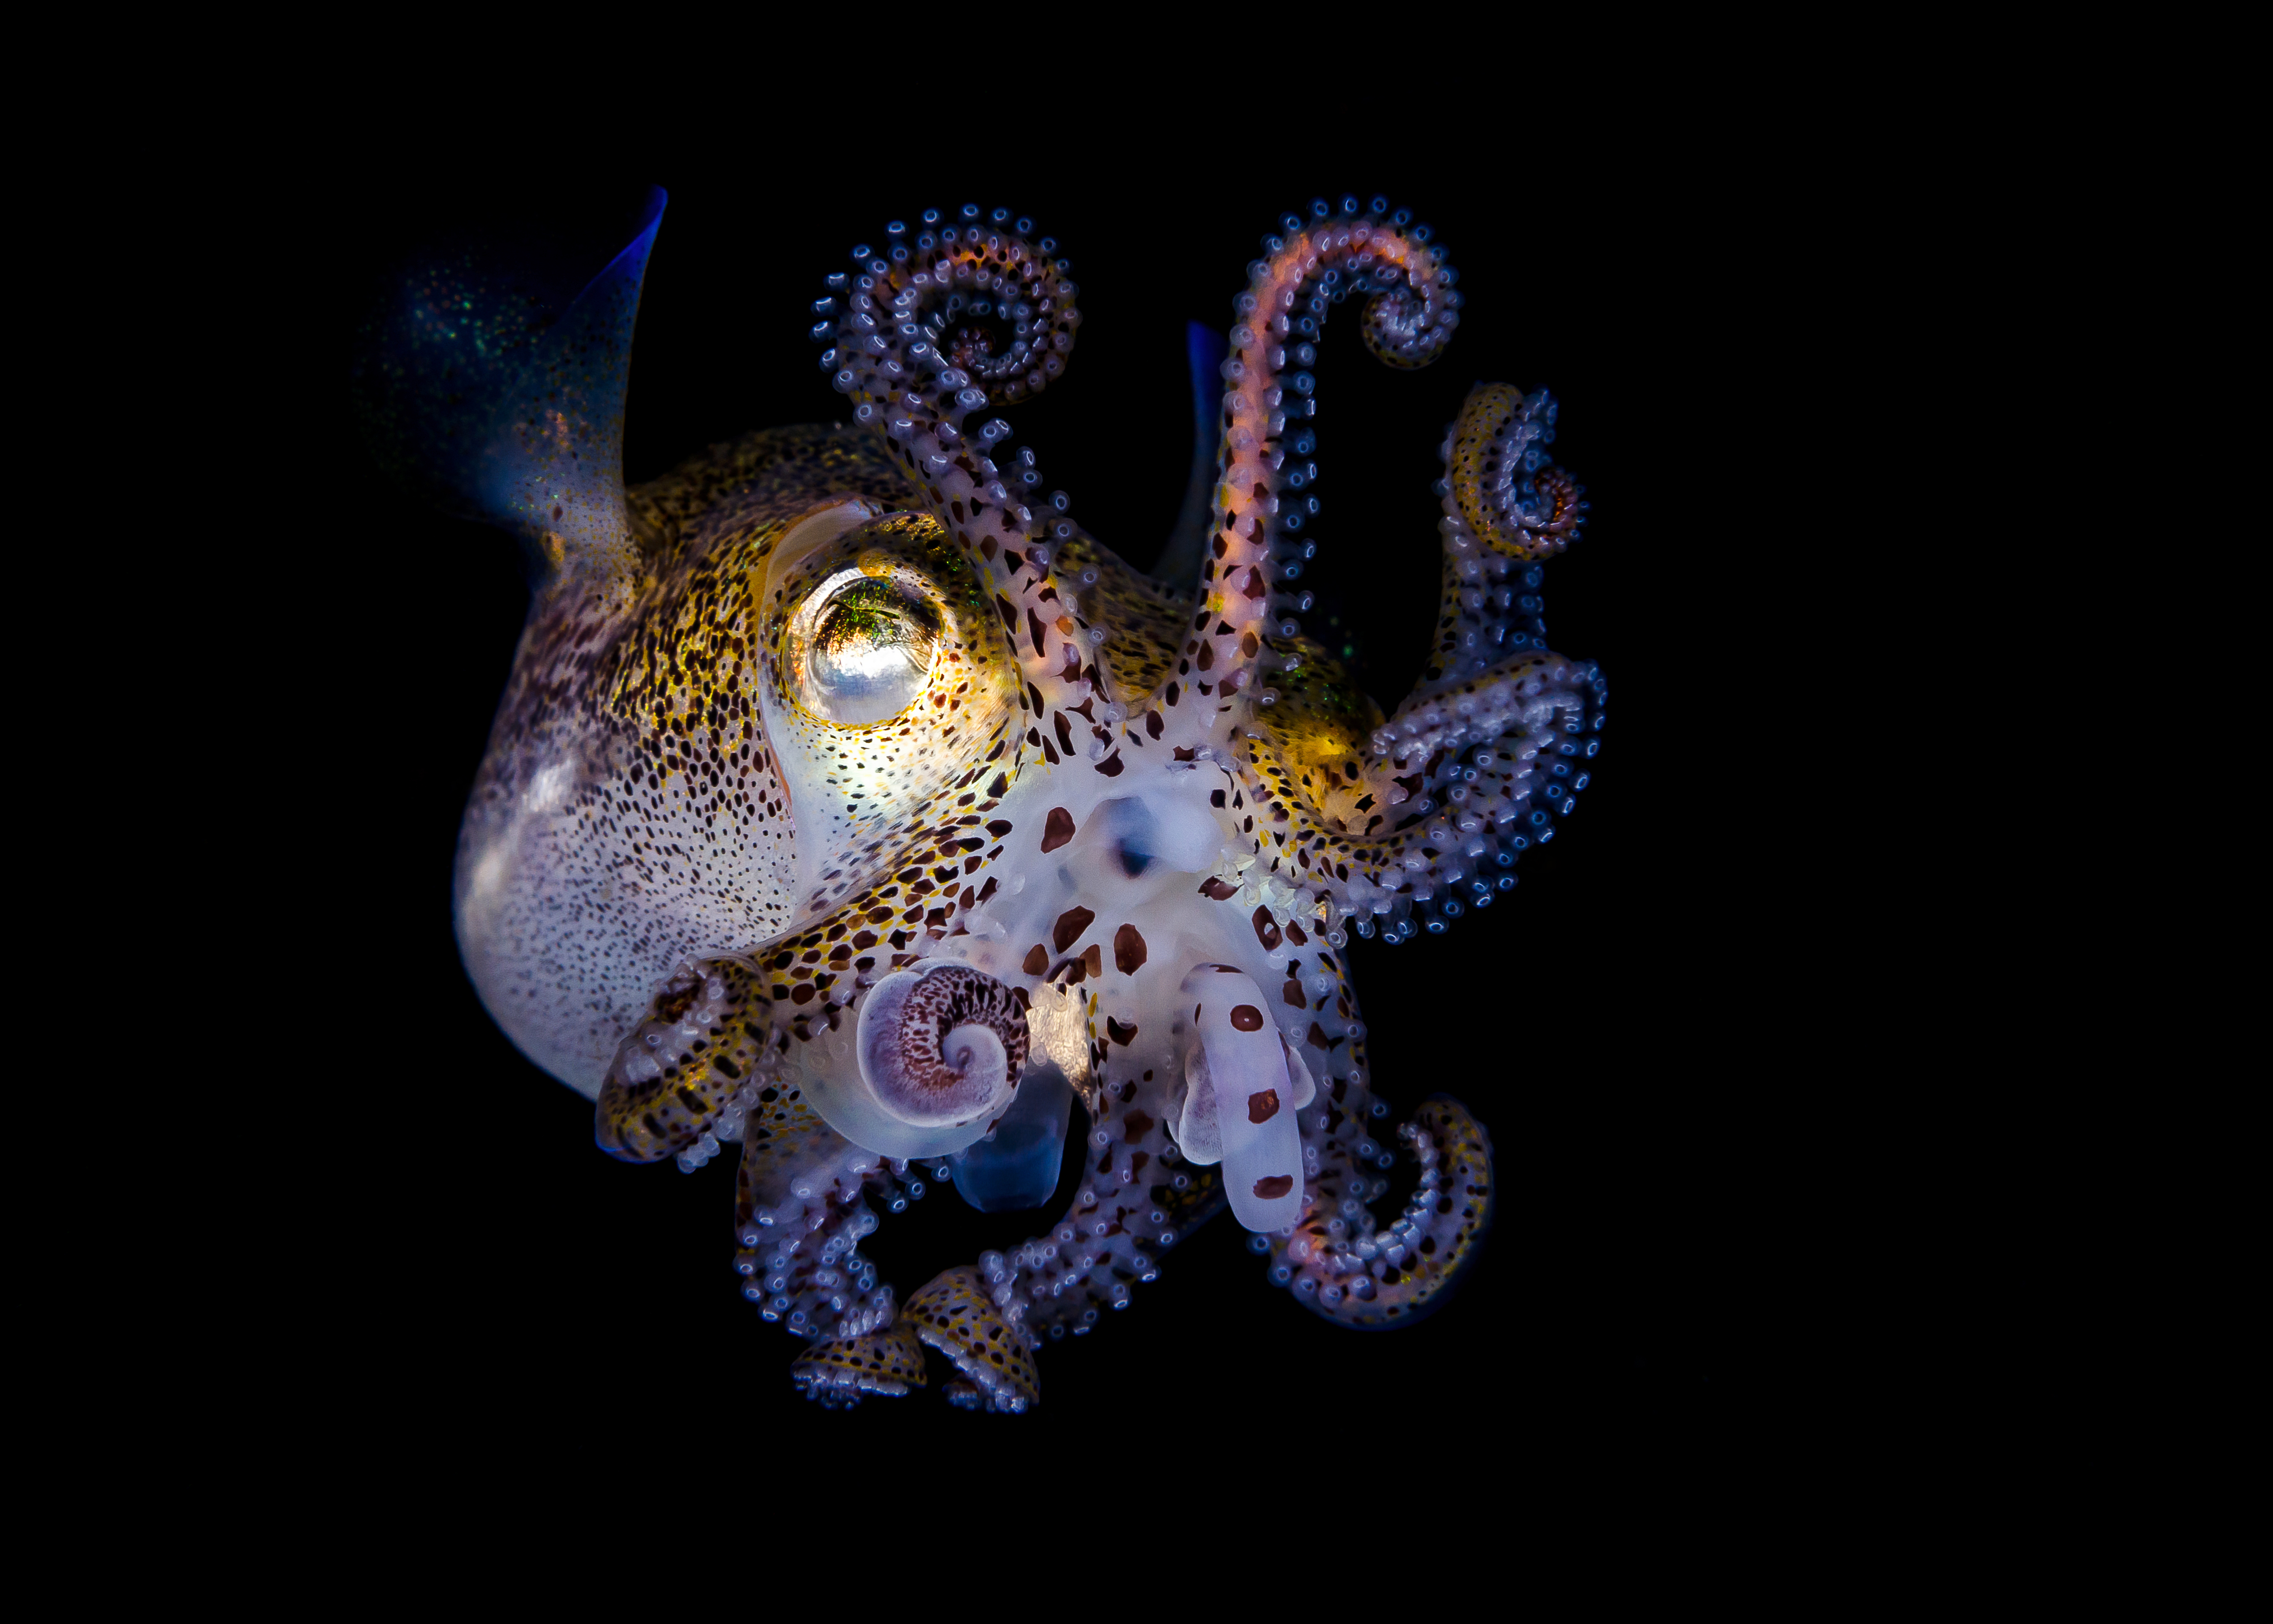 Bobtail Squid HD wallpapers, Desktop wallpaper - most viewed